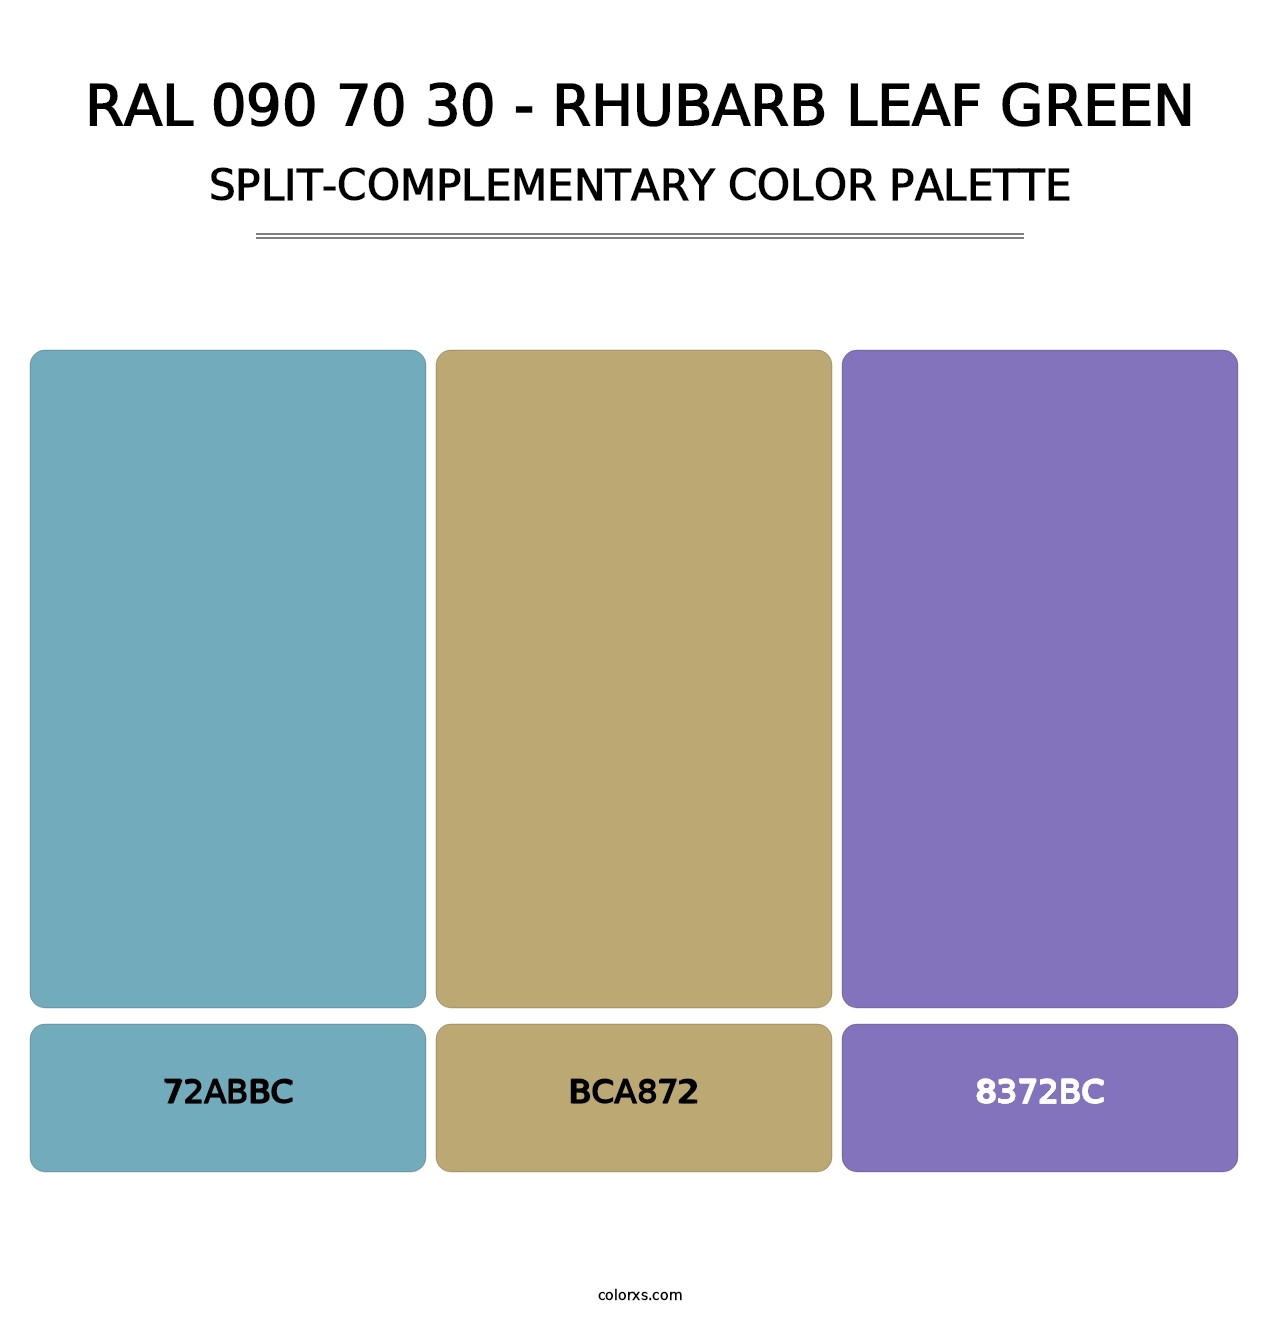 RAL 090 70 30 - Rhubarb Leaf Green - Split-Complementary Color Palette